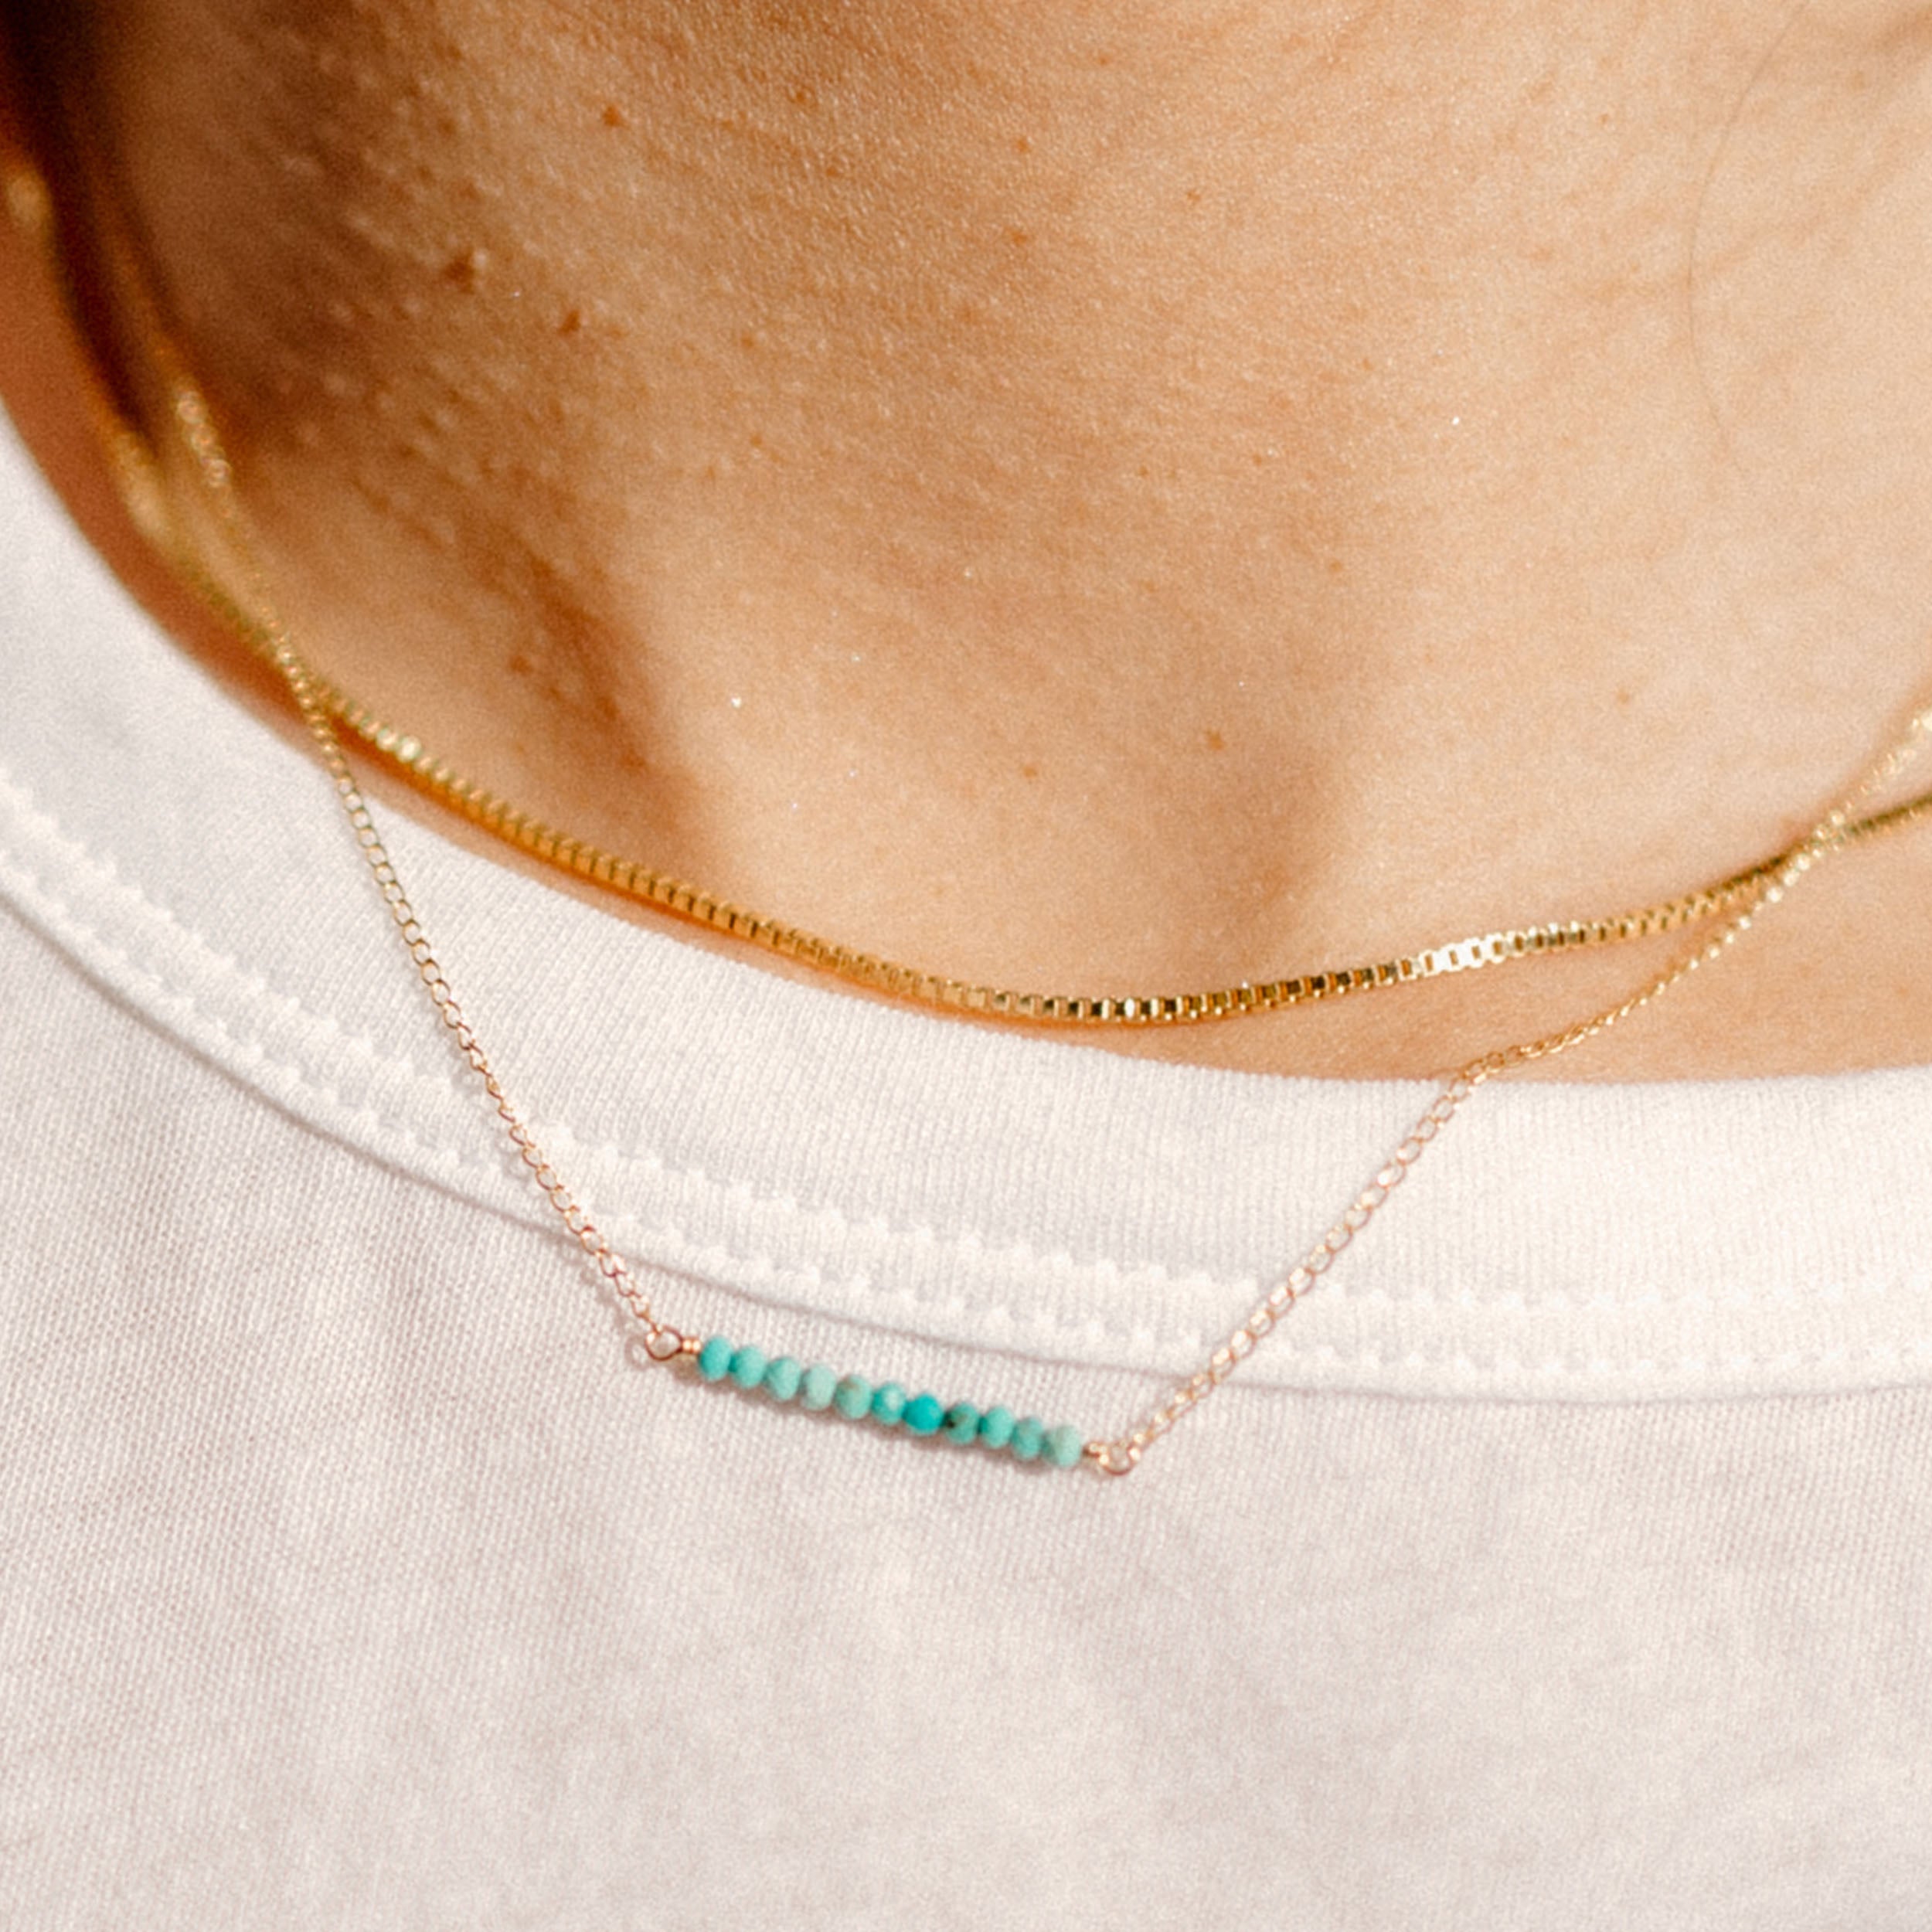 Tiny Turquoise Gemstone Necklace - Favor Jewelry